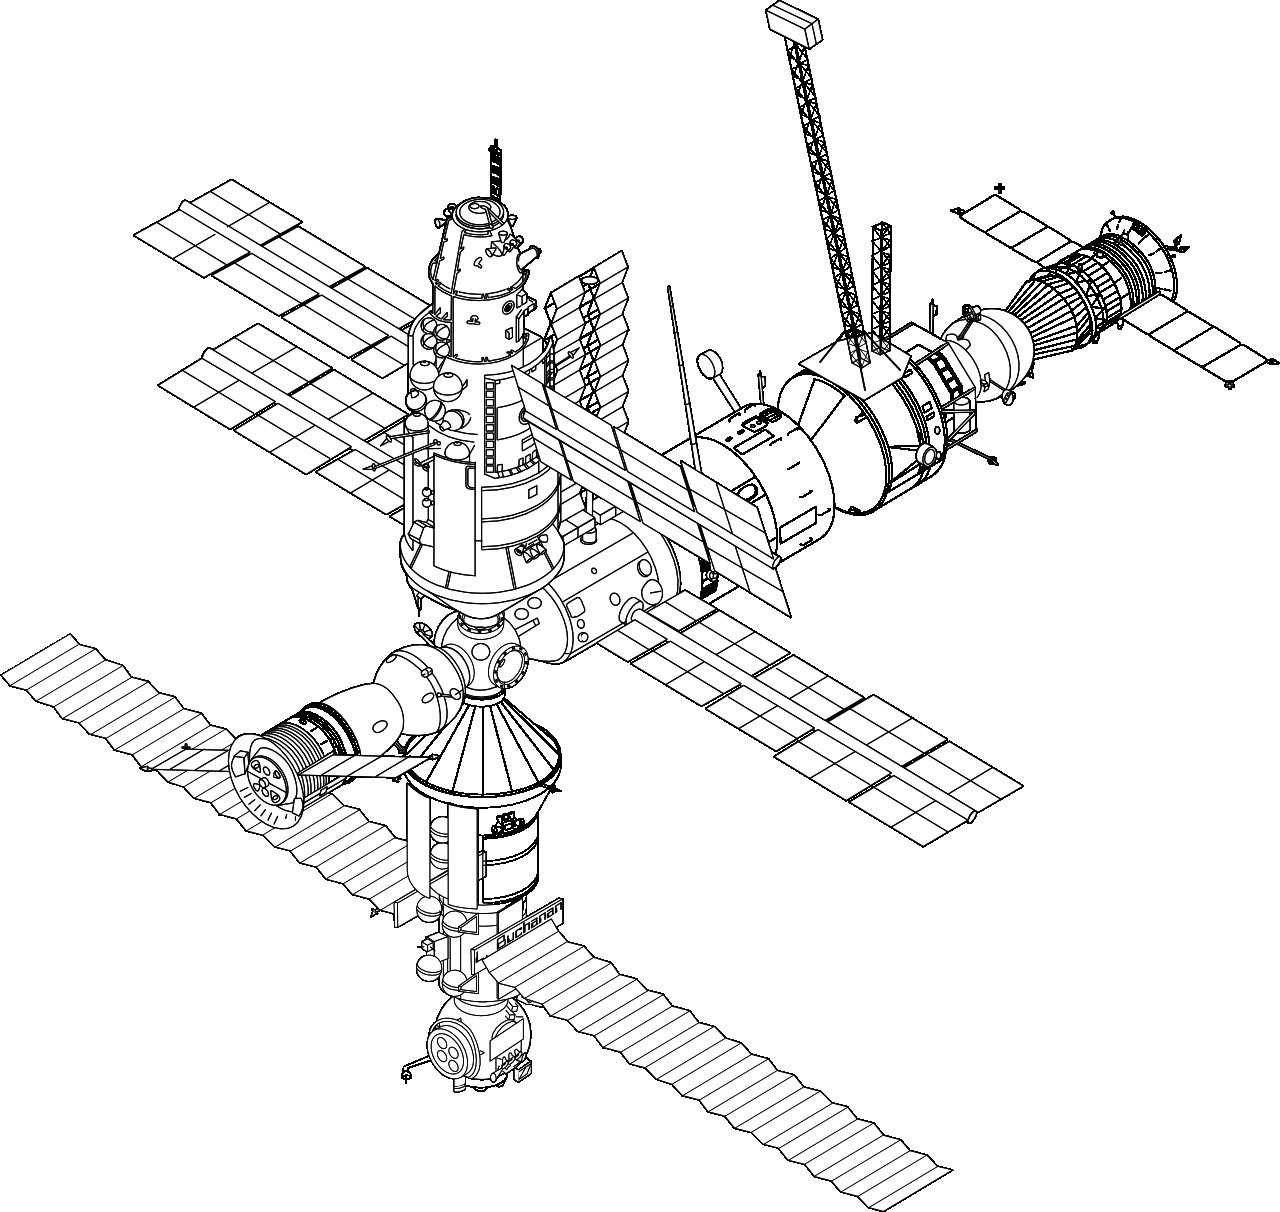 Omalovnka kosmick stanice k vytisknut na A4